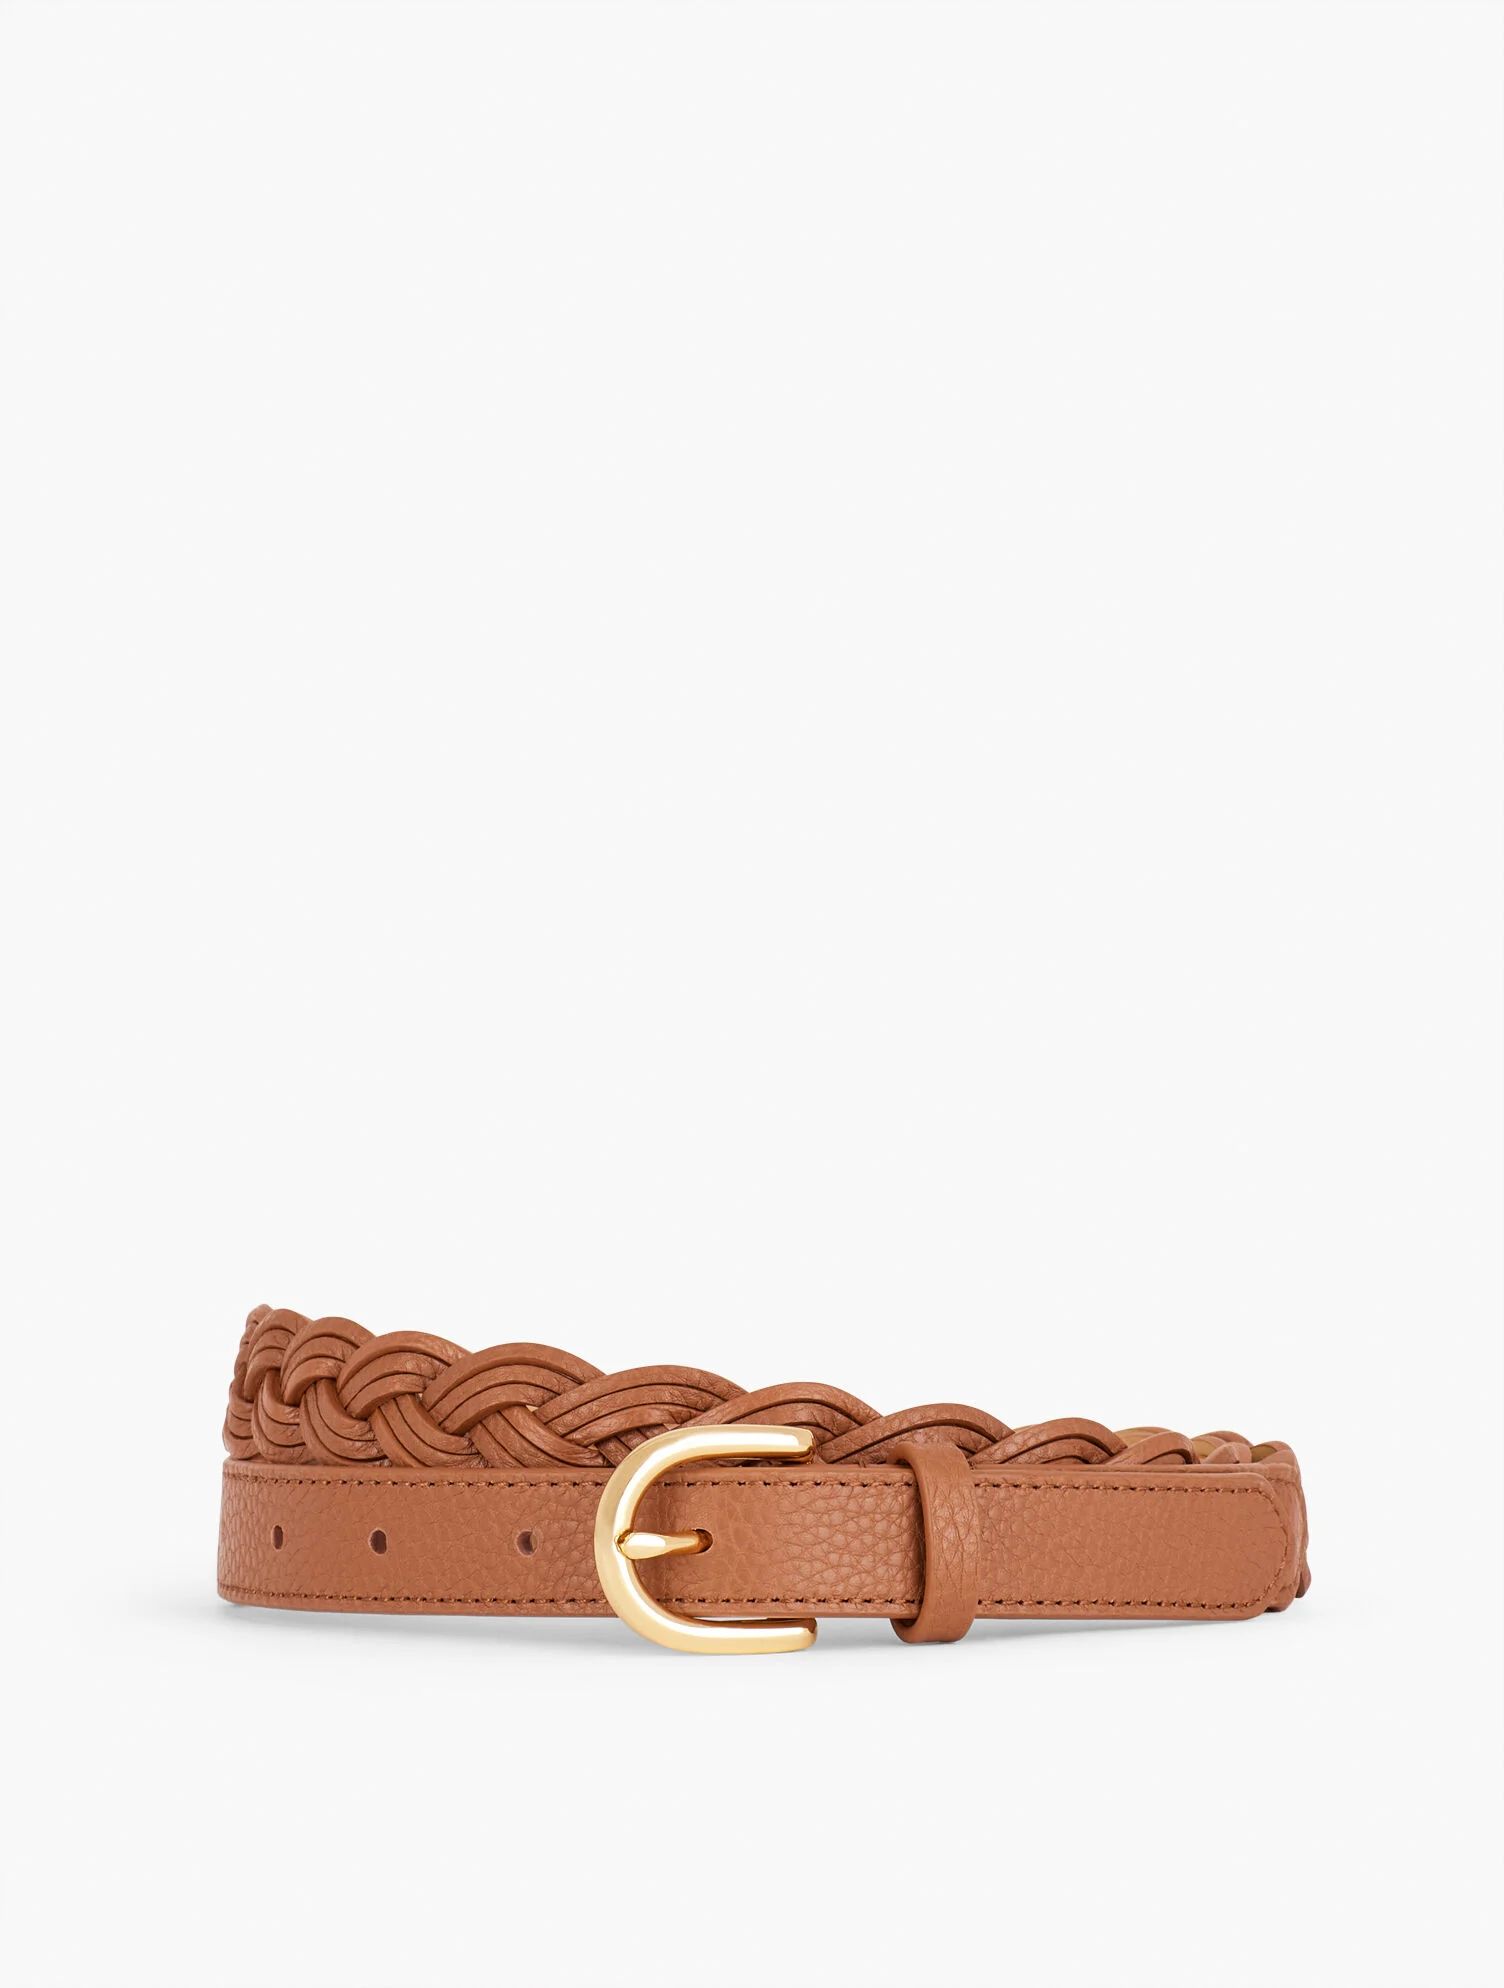 Braided Leather Belt | Talbots